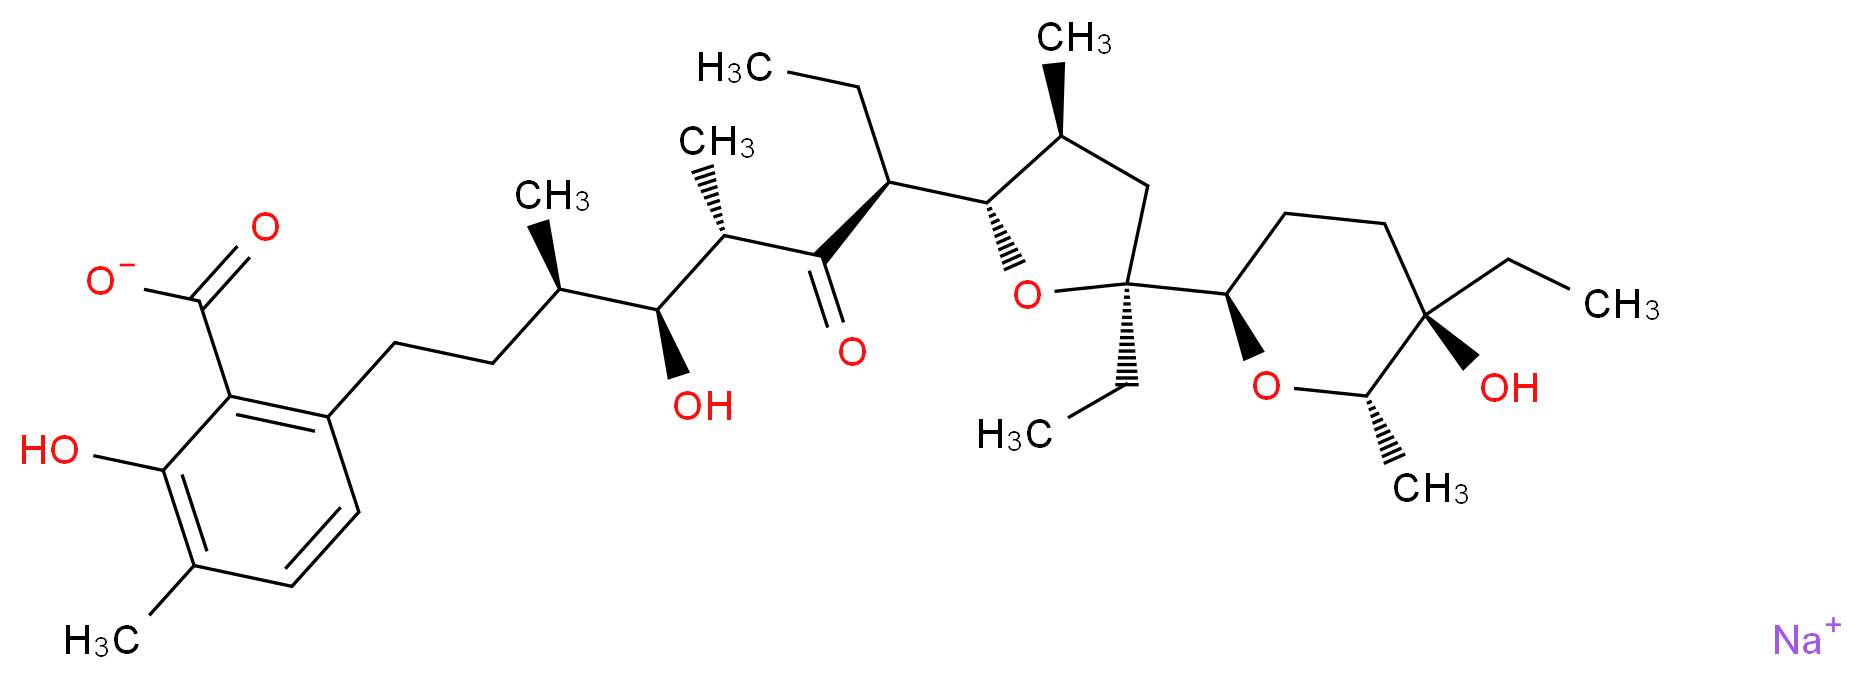 Lasalocid A Sodium Salt (Solution in acetonitrile 0.2mg/2ml)_Molecular_structure_CAS_25999-20-6)